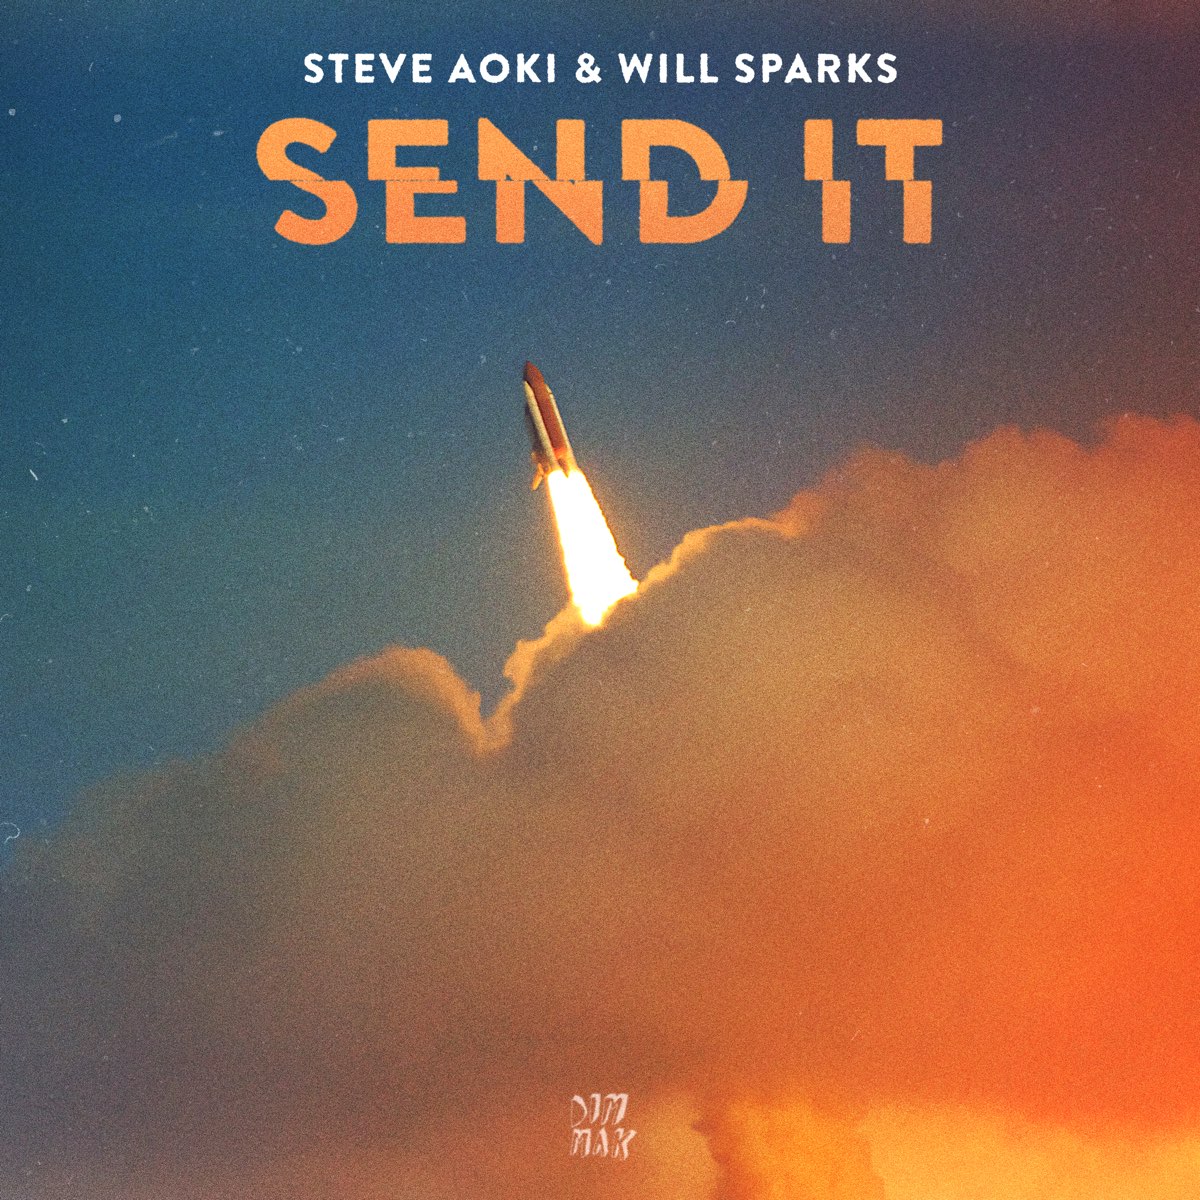 Steve Aoki & Will Sparks — Send It cover artwork